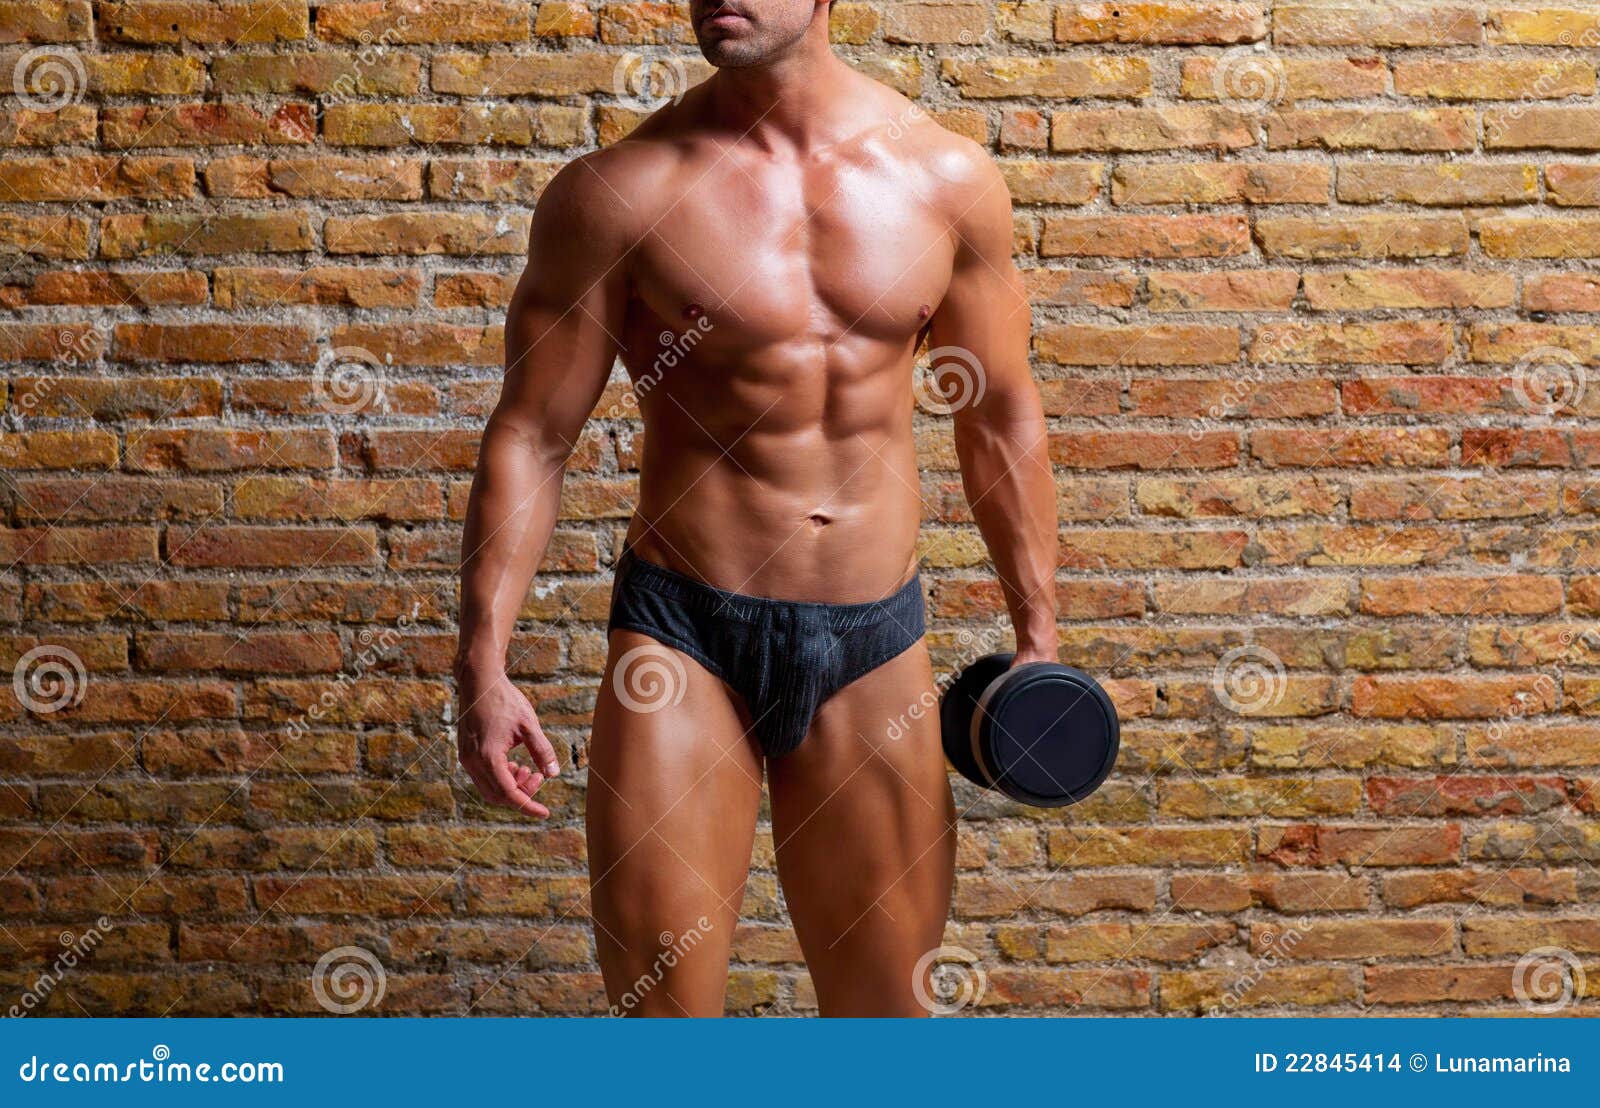 https://thumbs.dreamstime.com/z/muscle-shaped-underwear-man-weight-gym-22845414.jpg